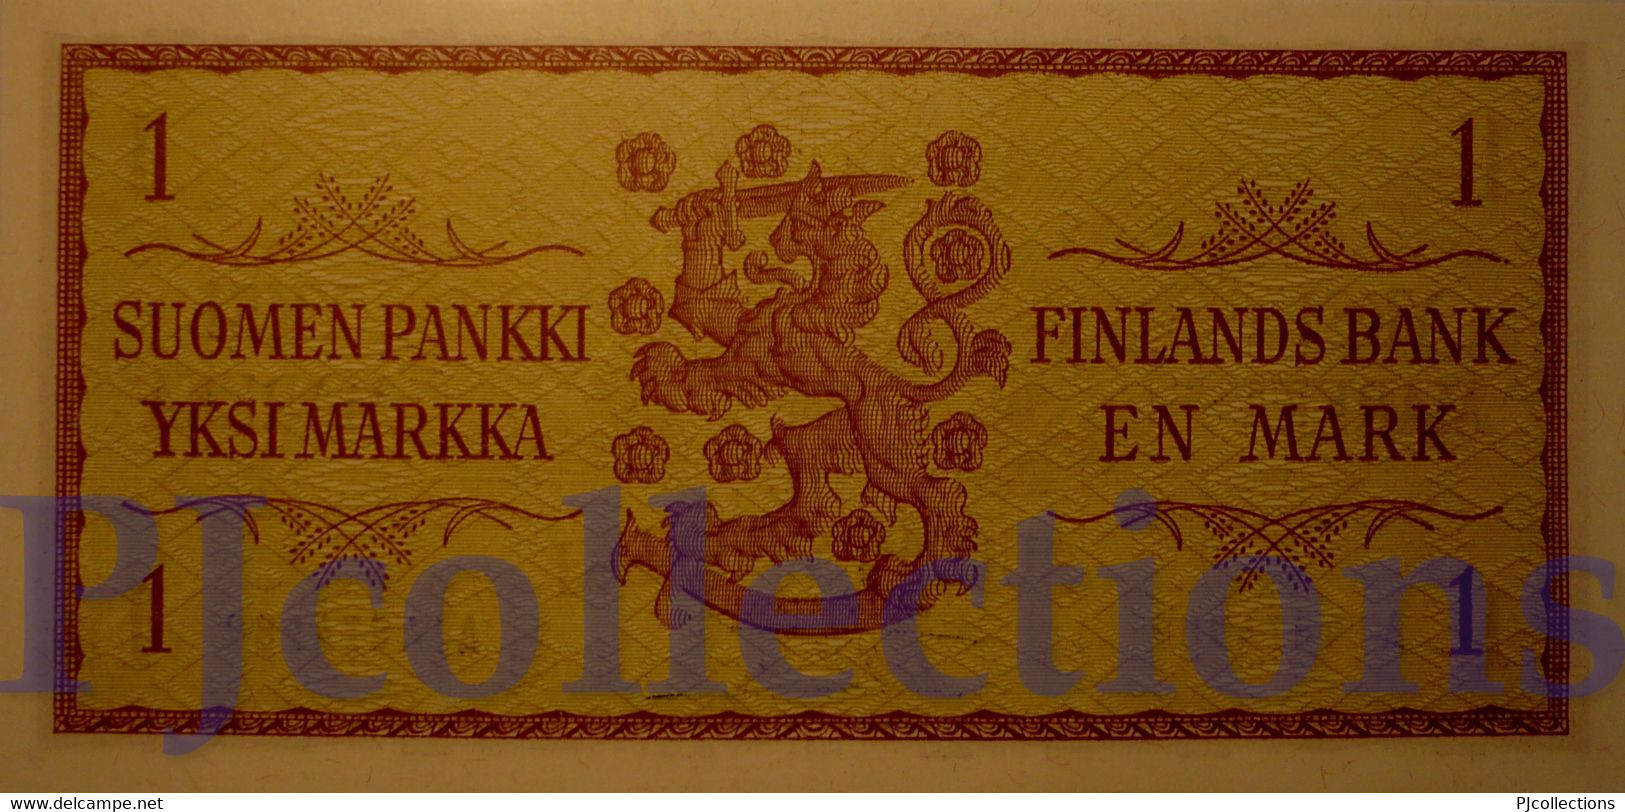 FINLAND 1 MARKKA 1963 PICK 98 UNC - Finland